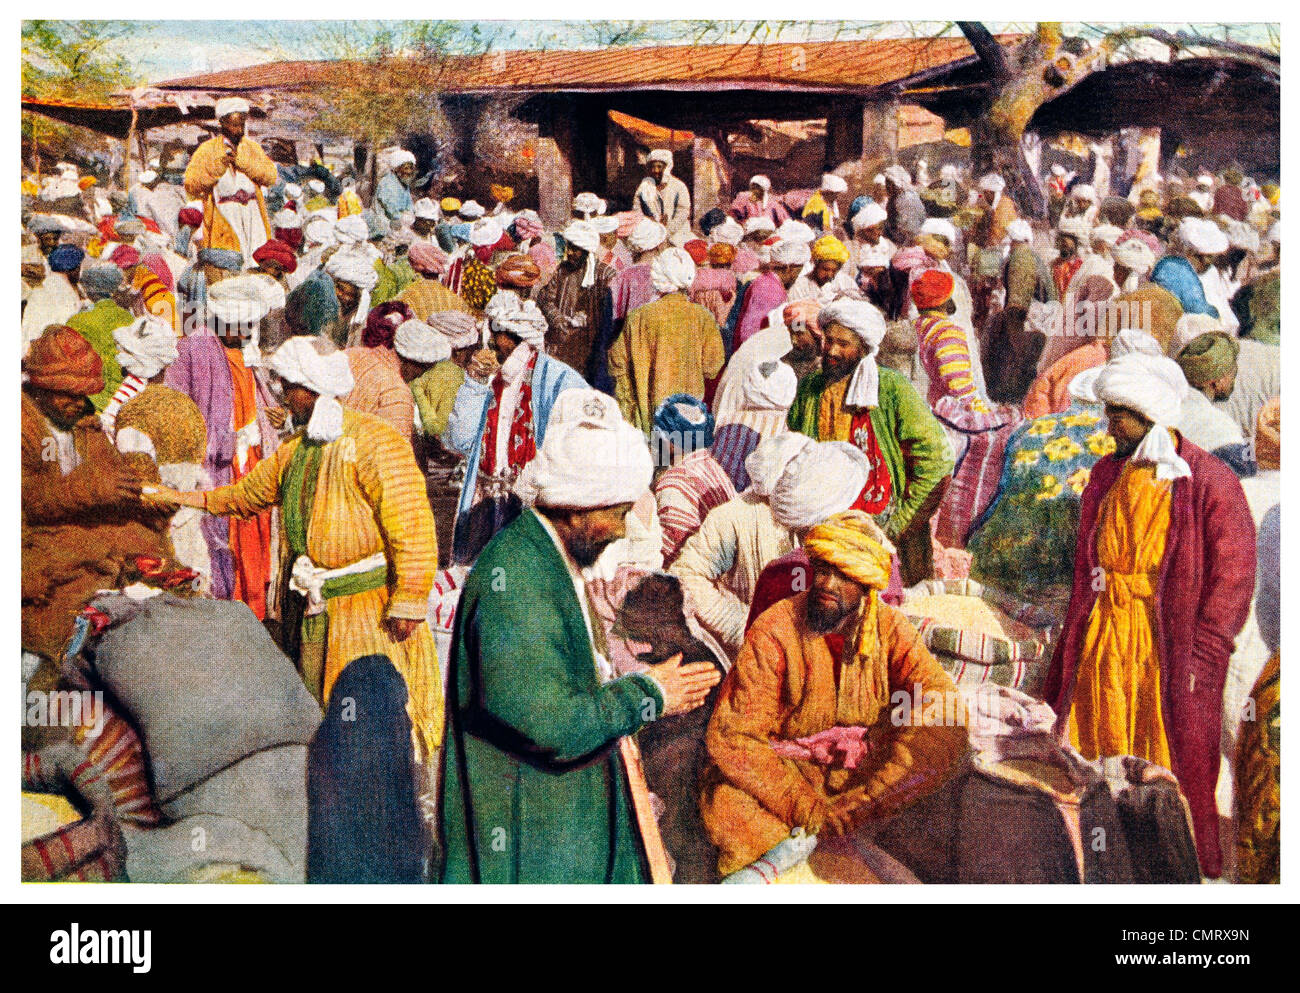 1919 Grain Market of Samarkand Stock Photo